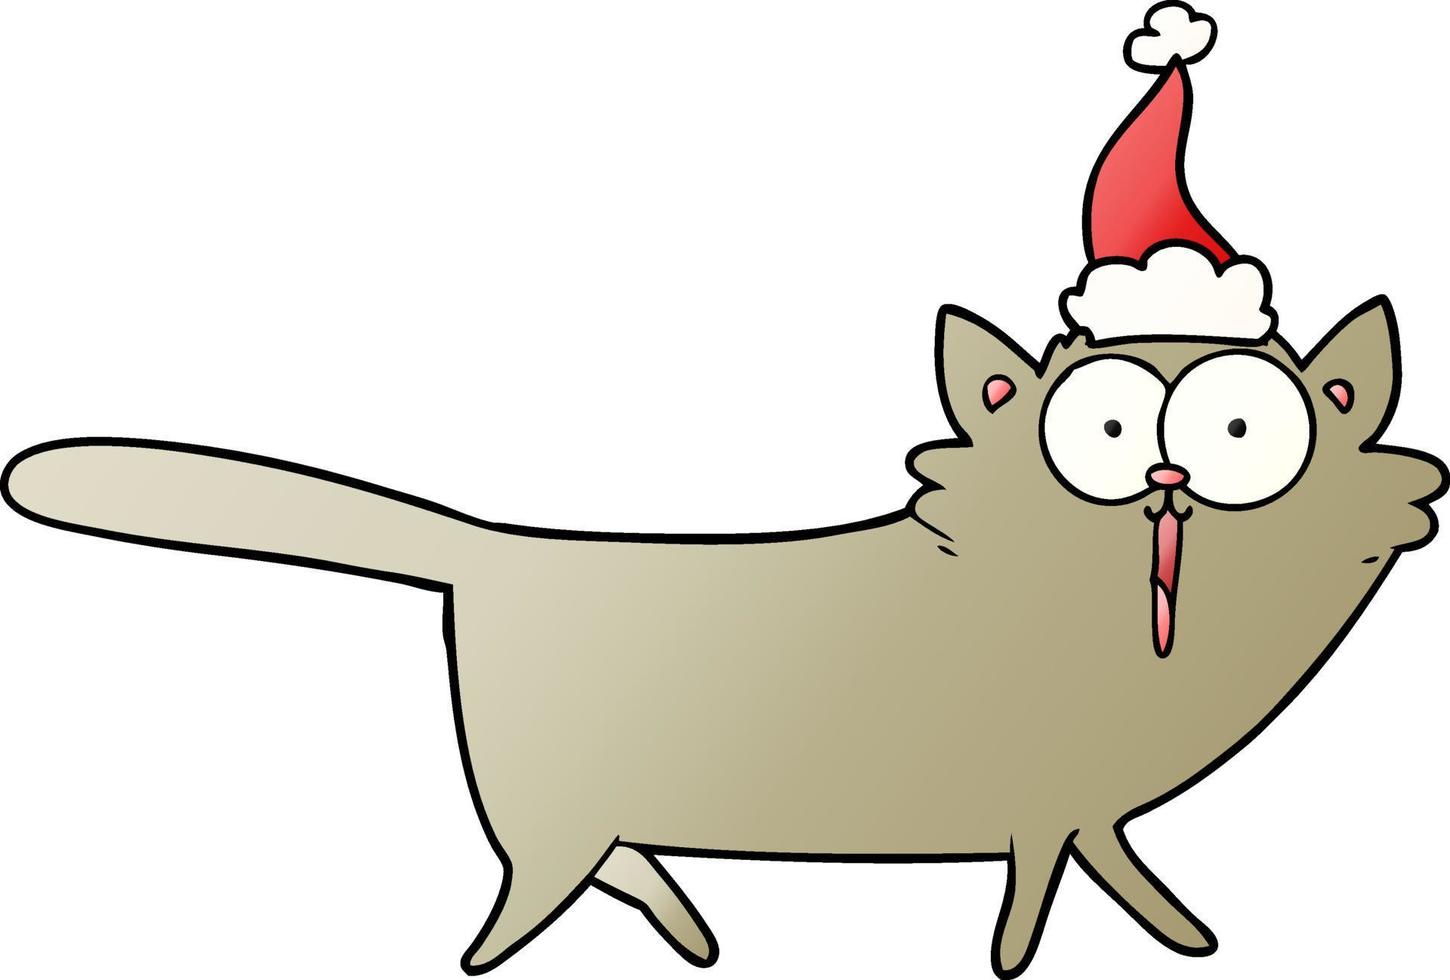 gradient cartoon of a cat wearing santa hat vector